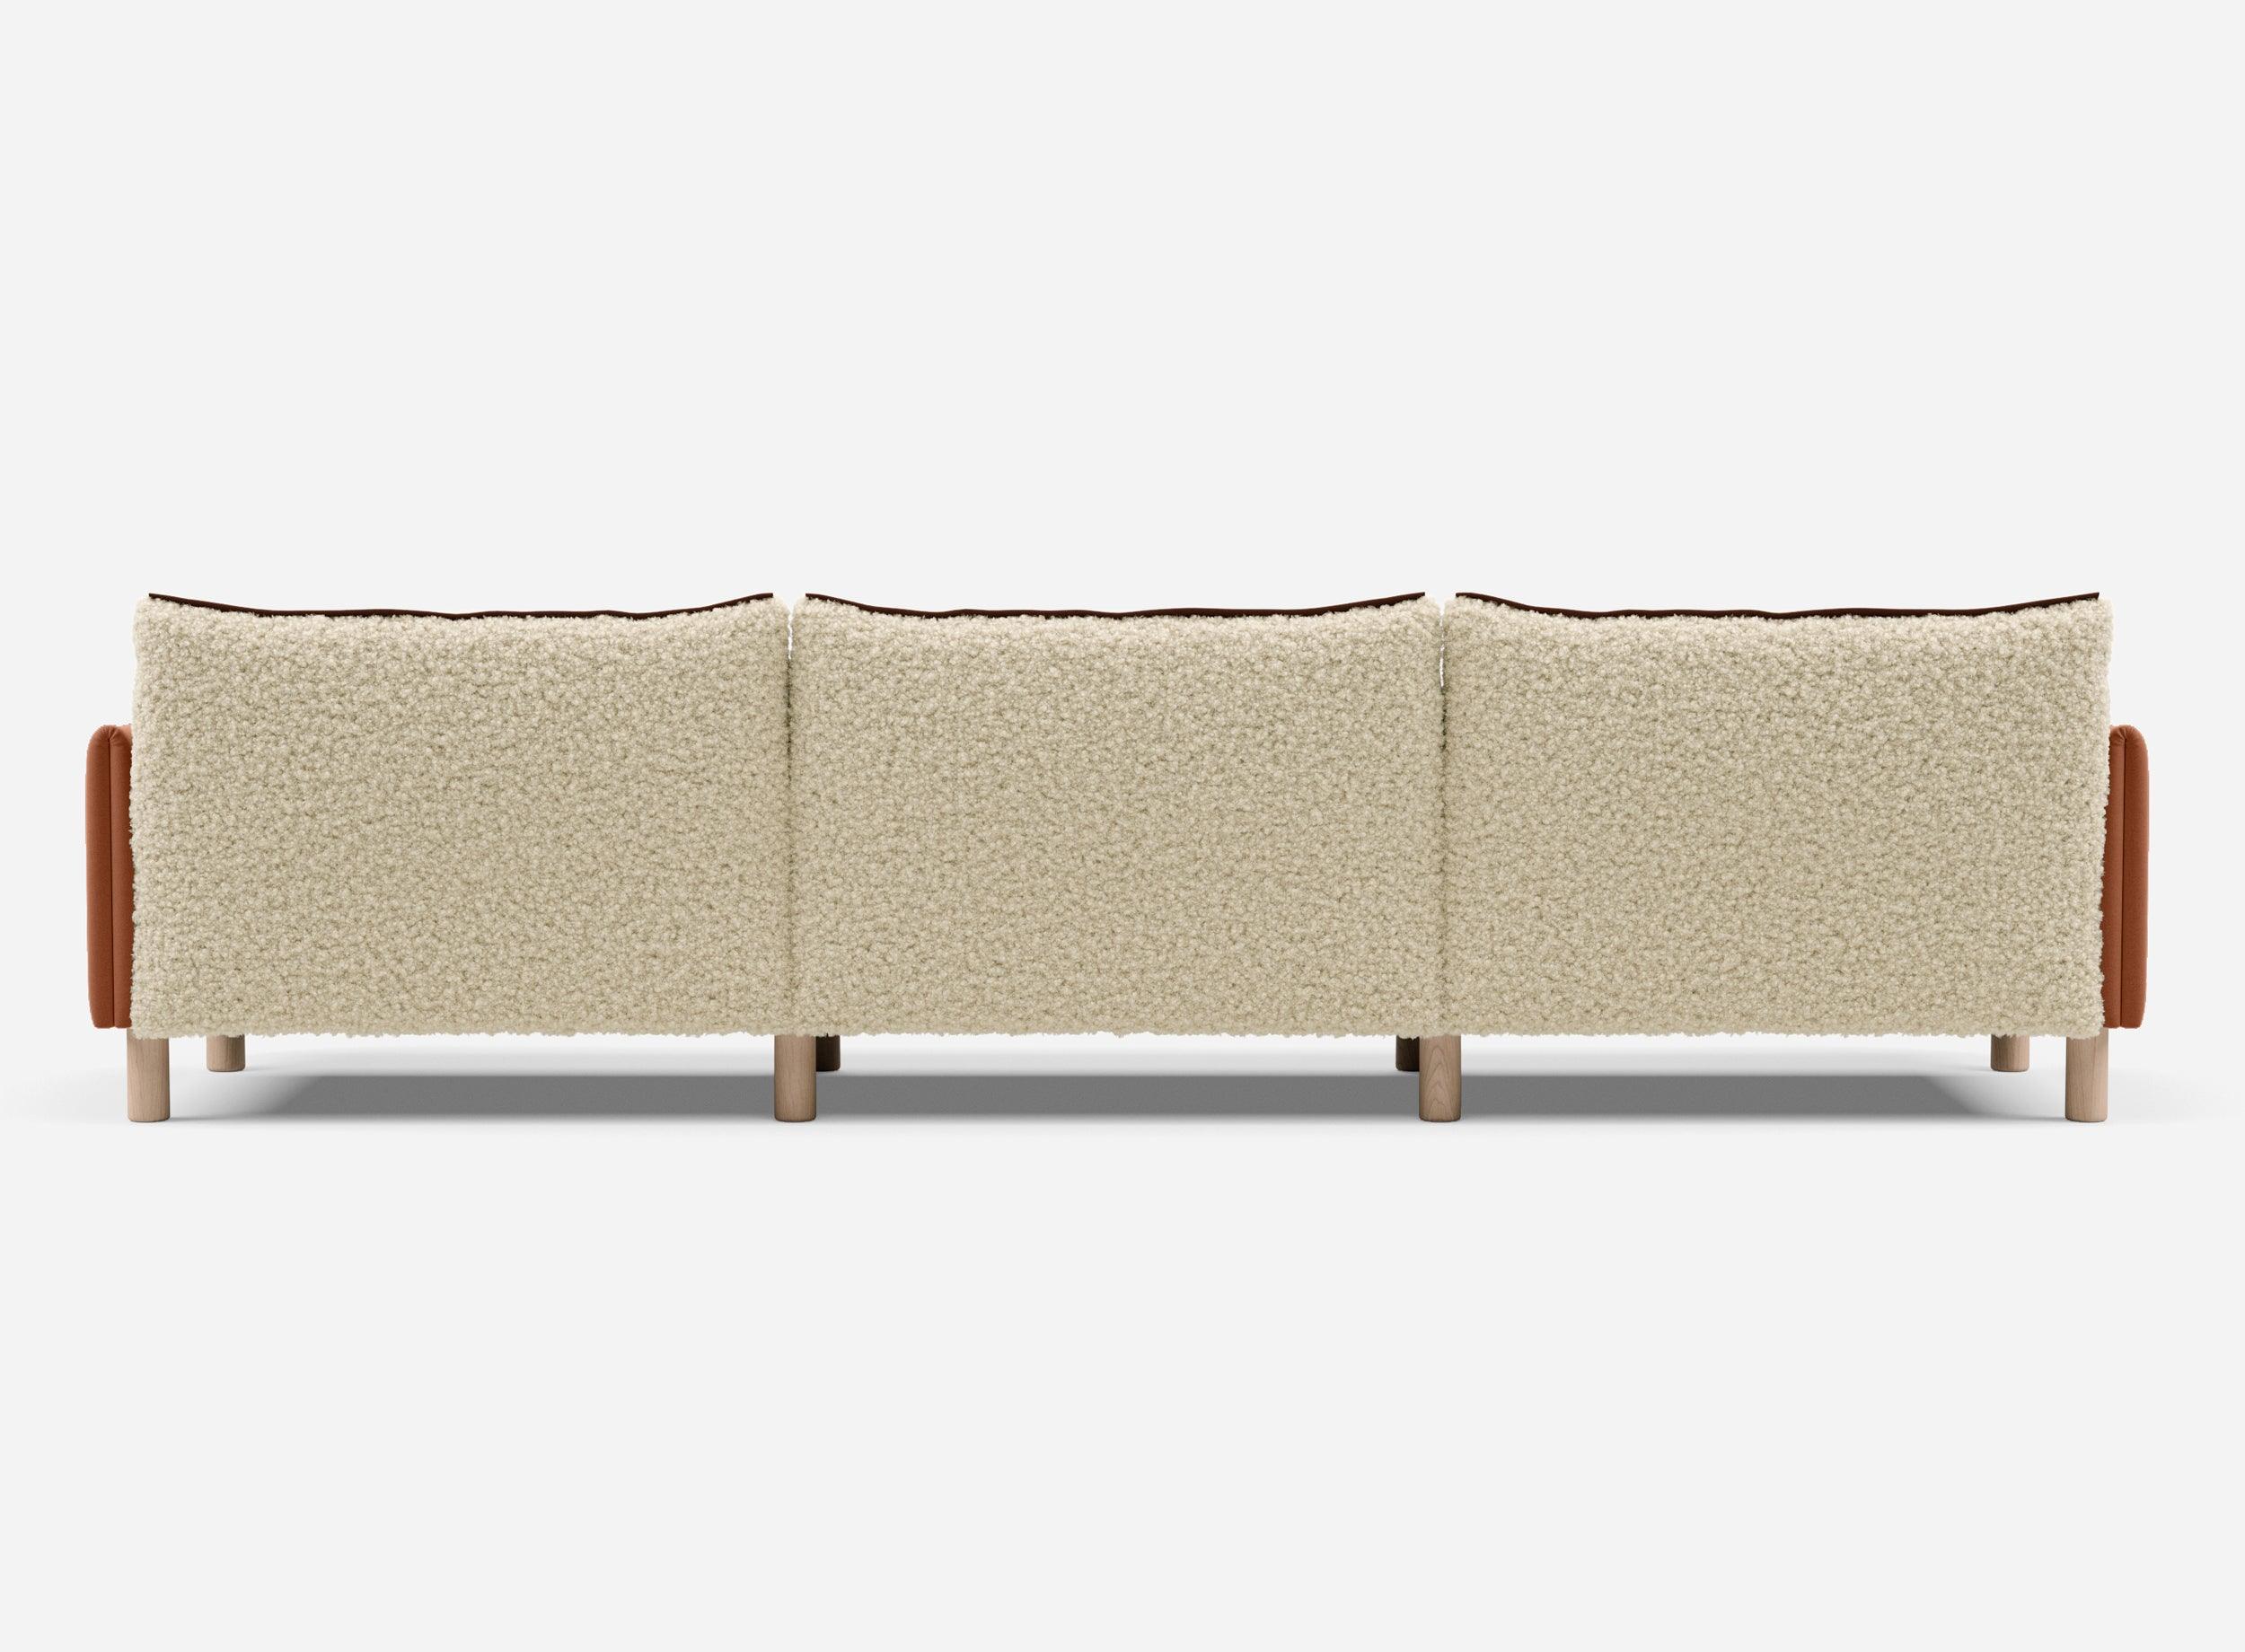 5 Seater Sofa | Cotton Meadow - Cozmo @ Cream Fleece Jacket | Brick Trim